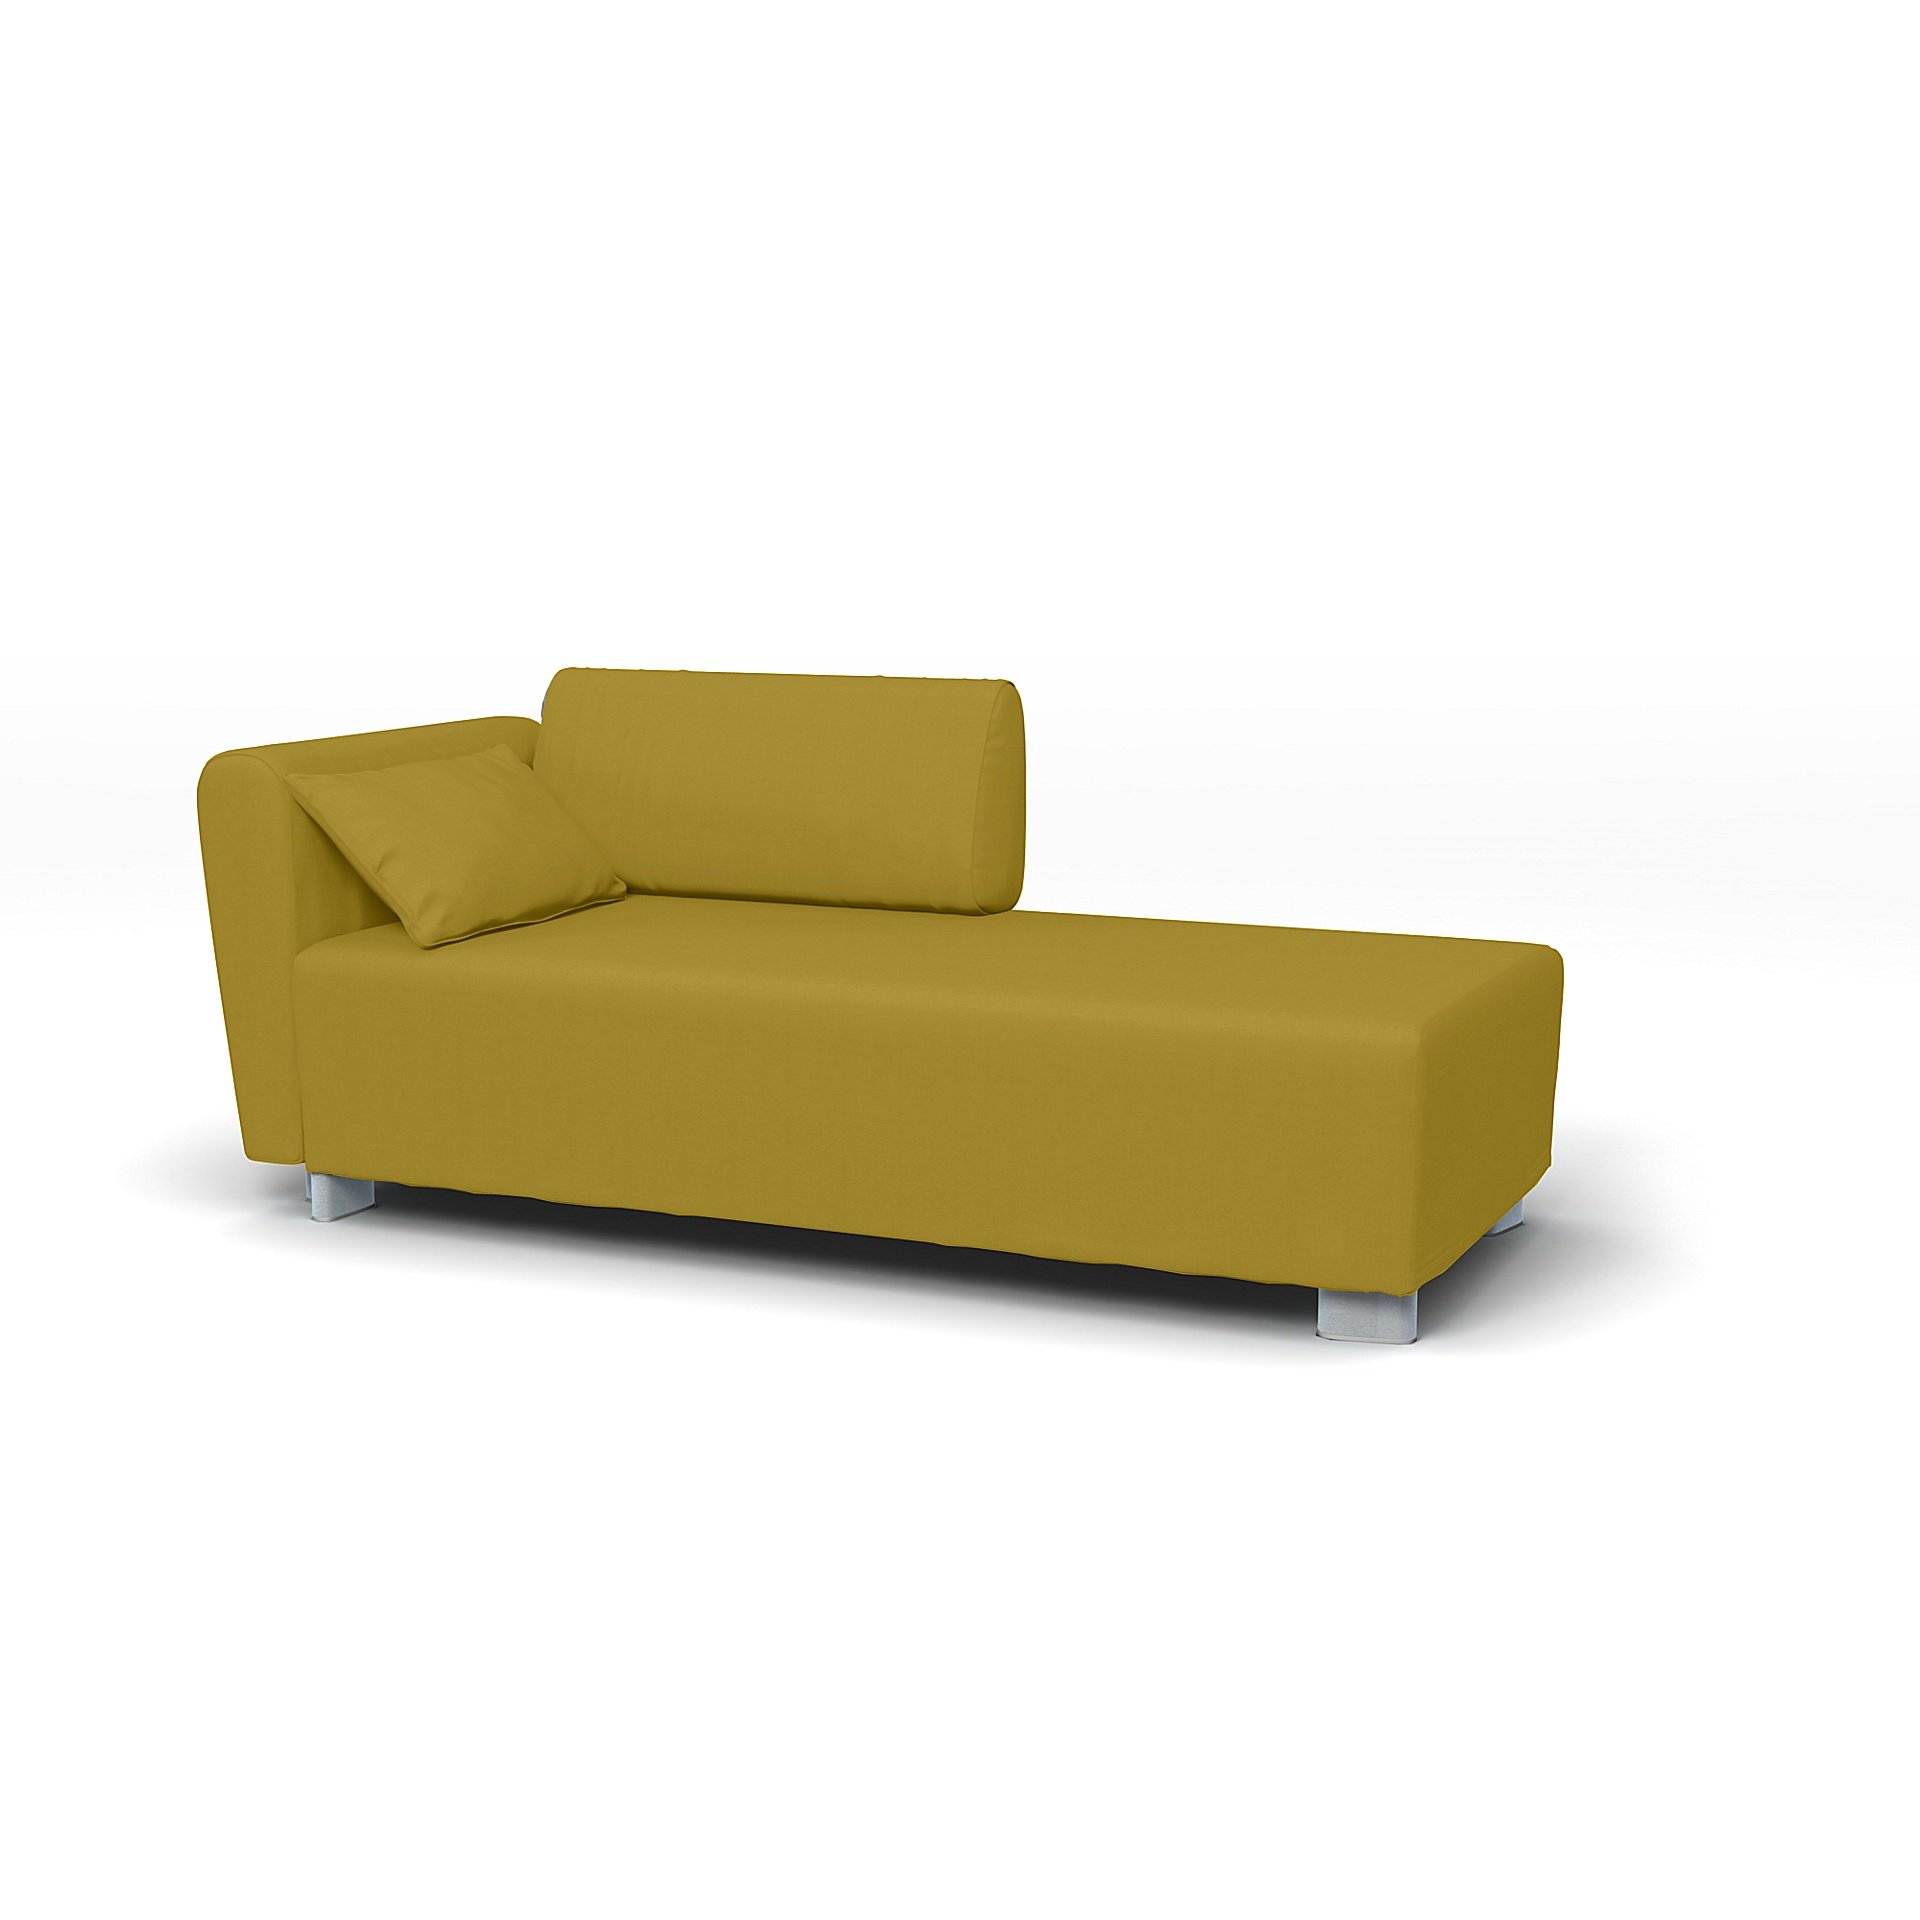 IKEA - Mysinge Chaise Longue with Armrest Cover, Olive Oil, Cotton - Bemz